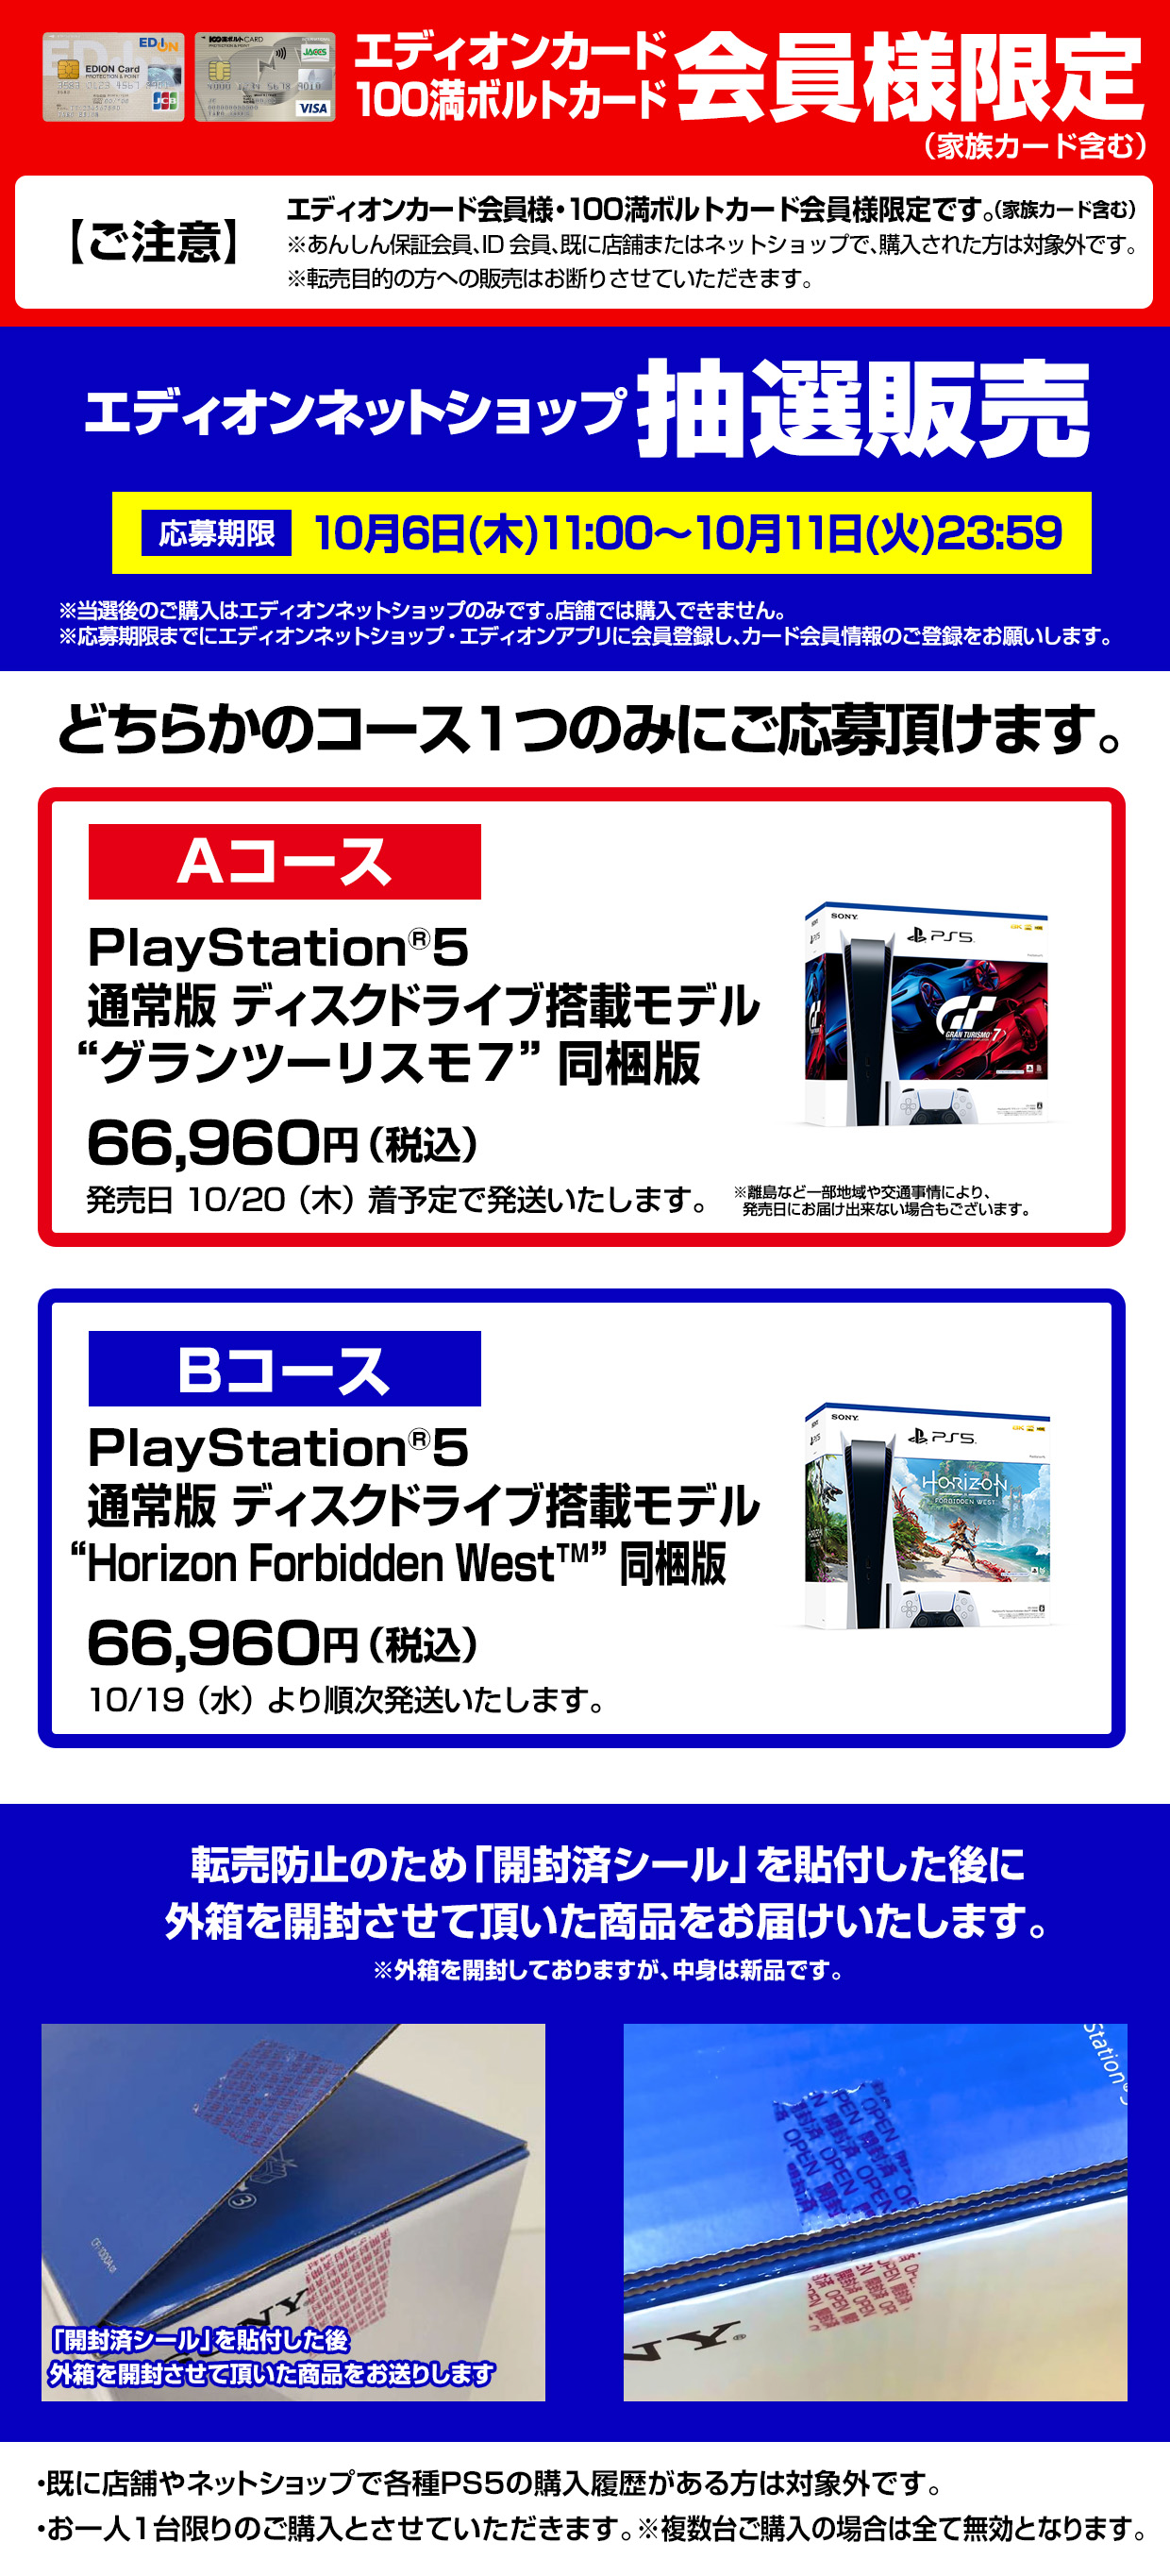 PlayStation 5“グランツーリスモ7”同梱版 www